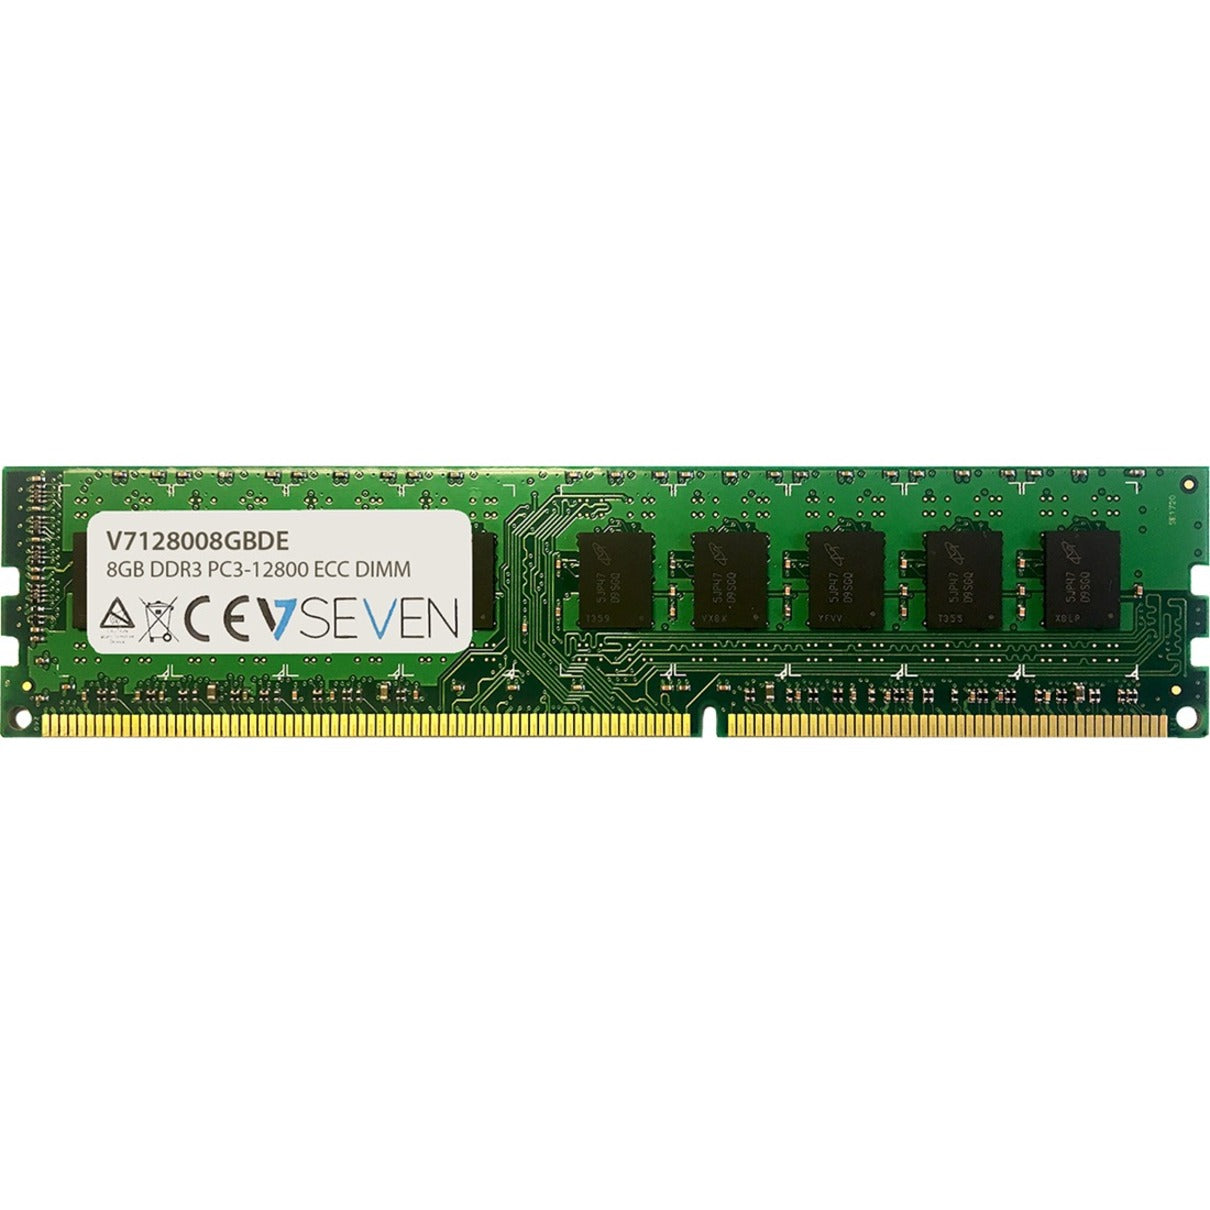 V7 V7128008GBDE 8GB DDR3 SDRAM Memory Module, 1600 MHz, ECC, Unbuffered